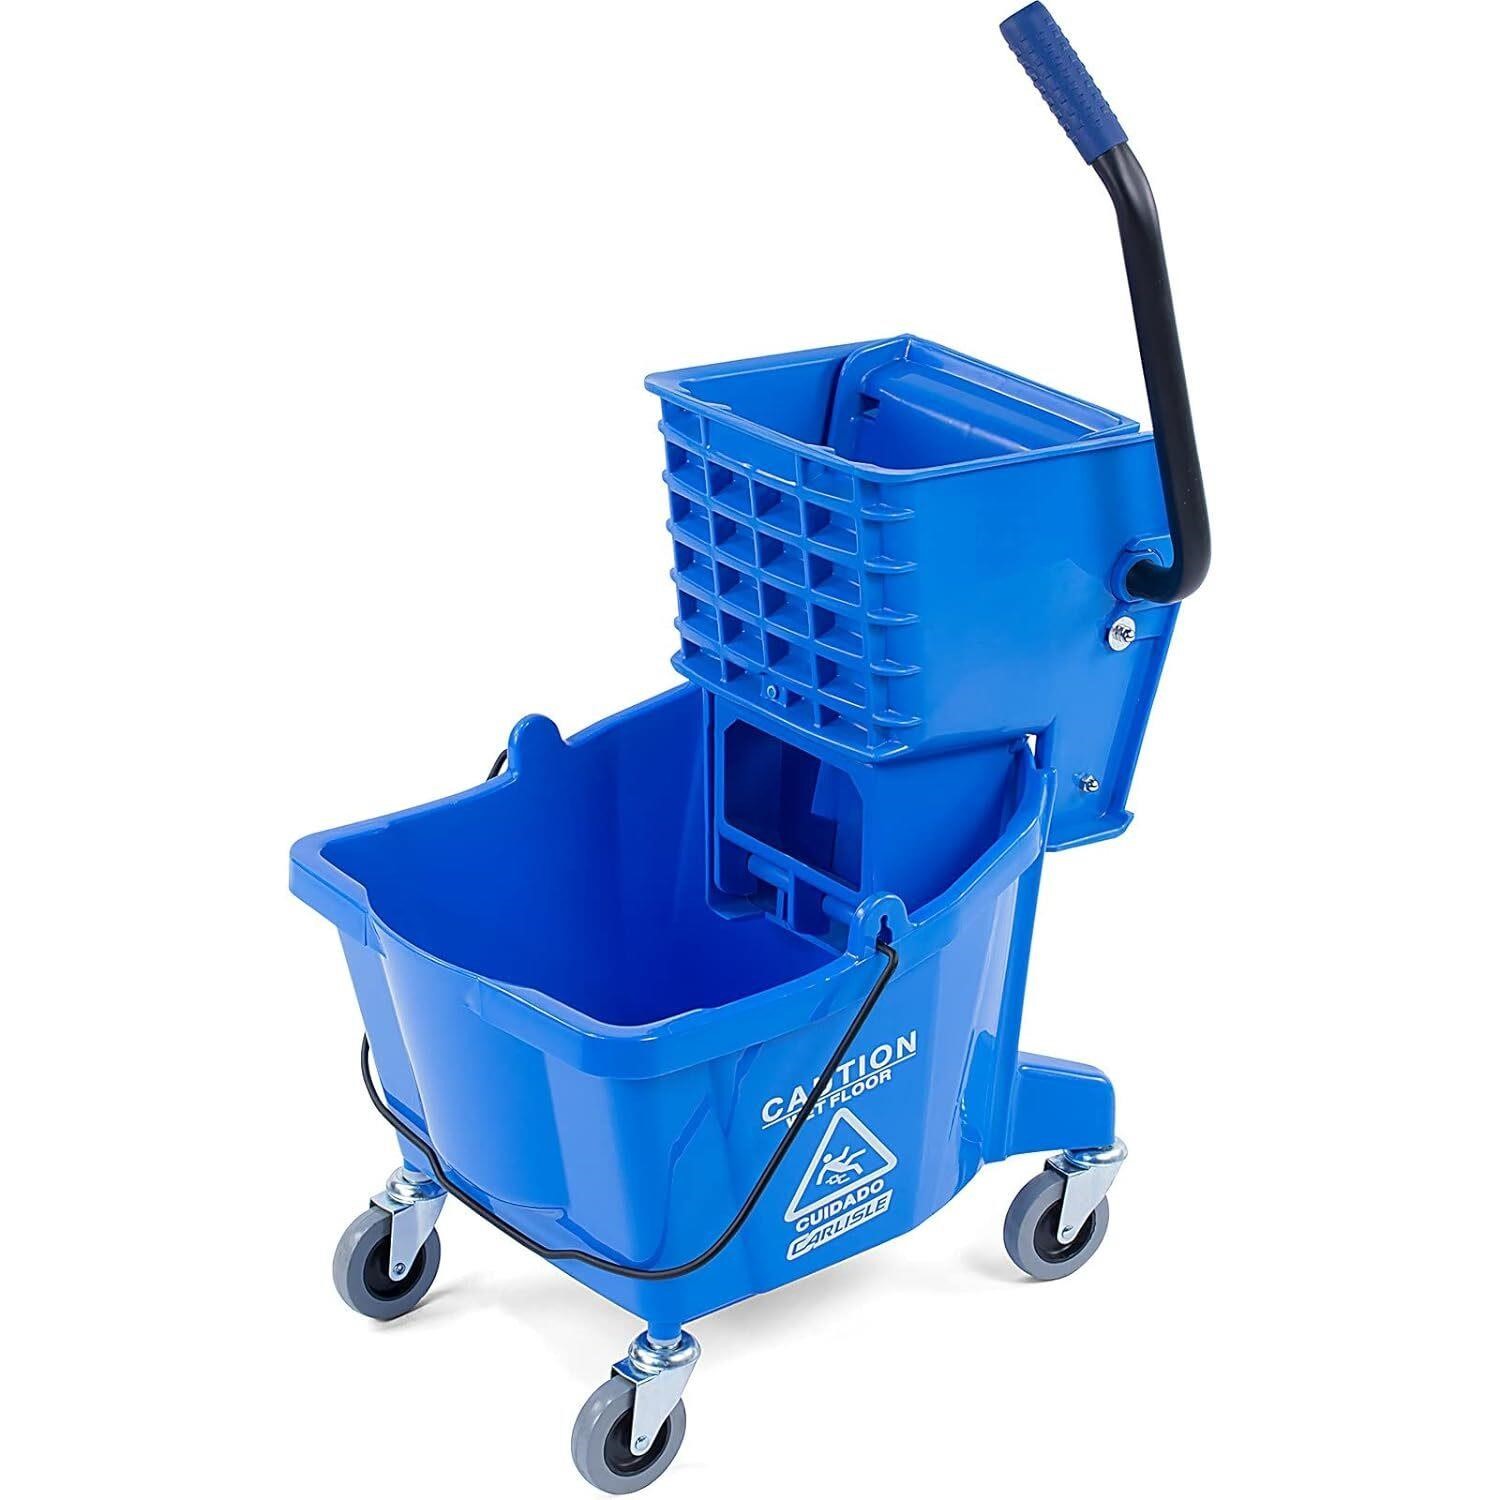 Carlisle Mop Bucket with Wringer  Blue